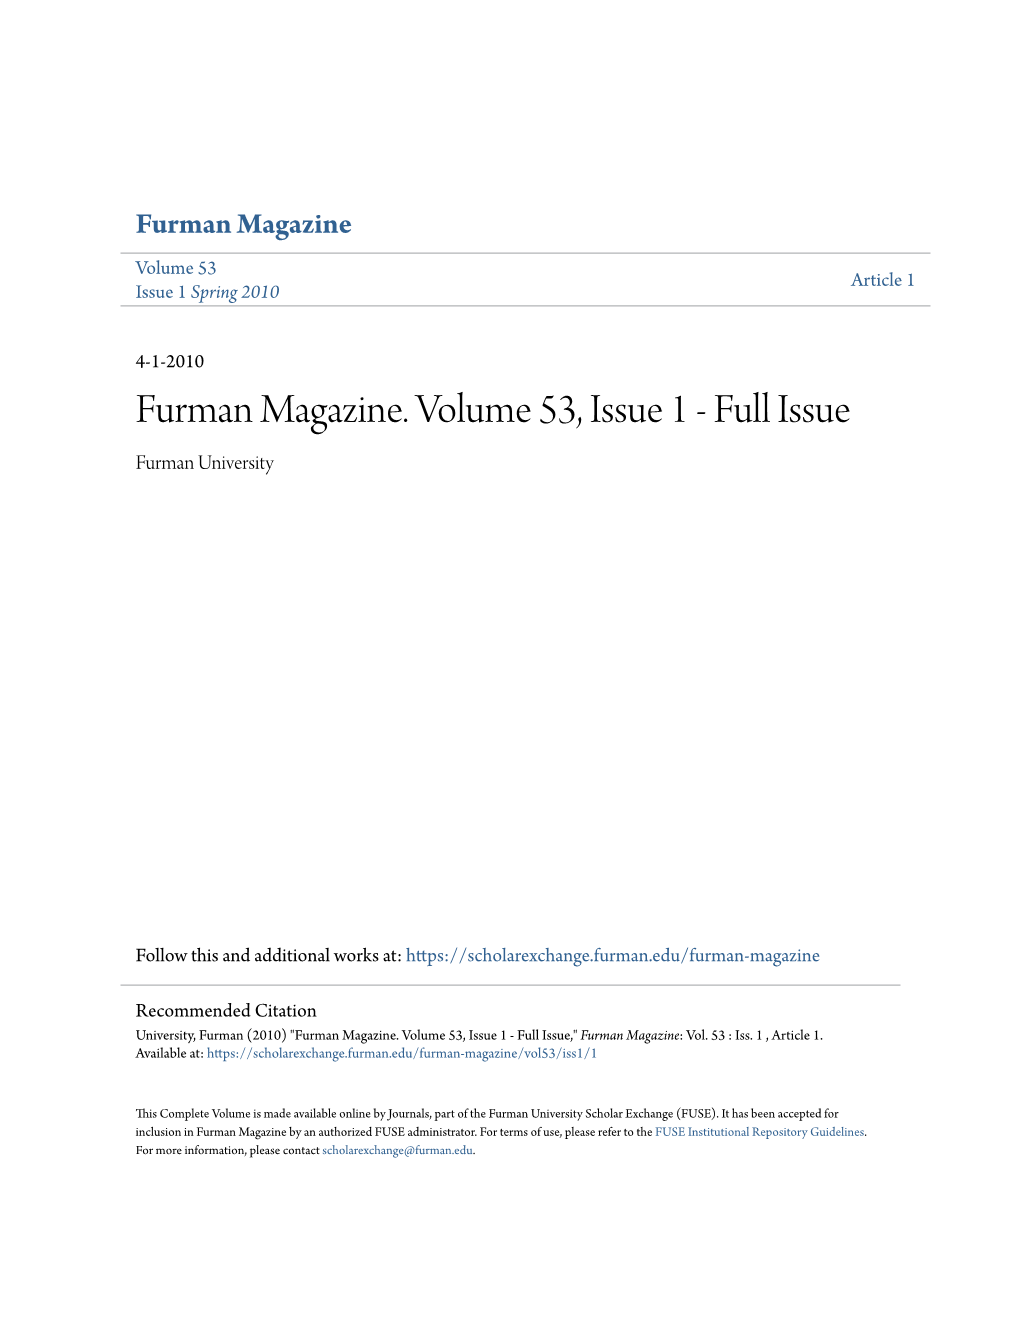 Furman Magazine. Volume 53, Issue 1 - Full Issue Furman University